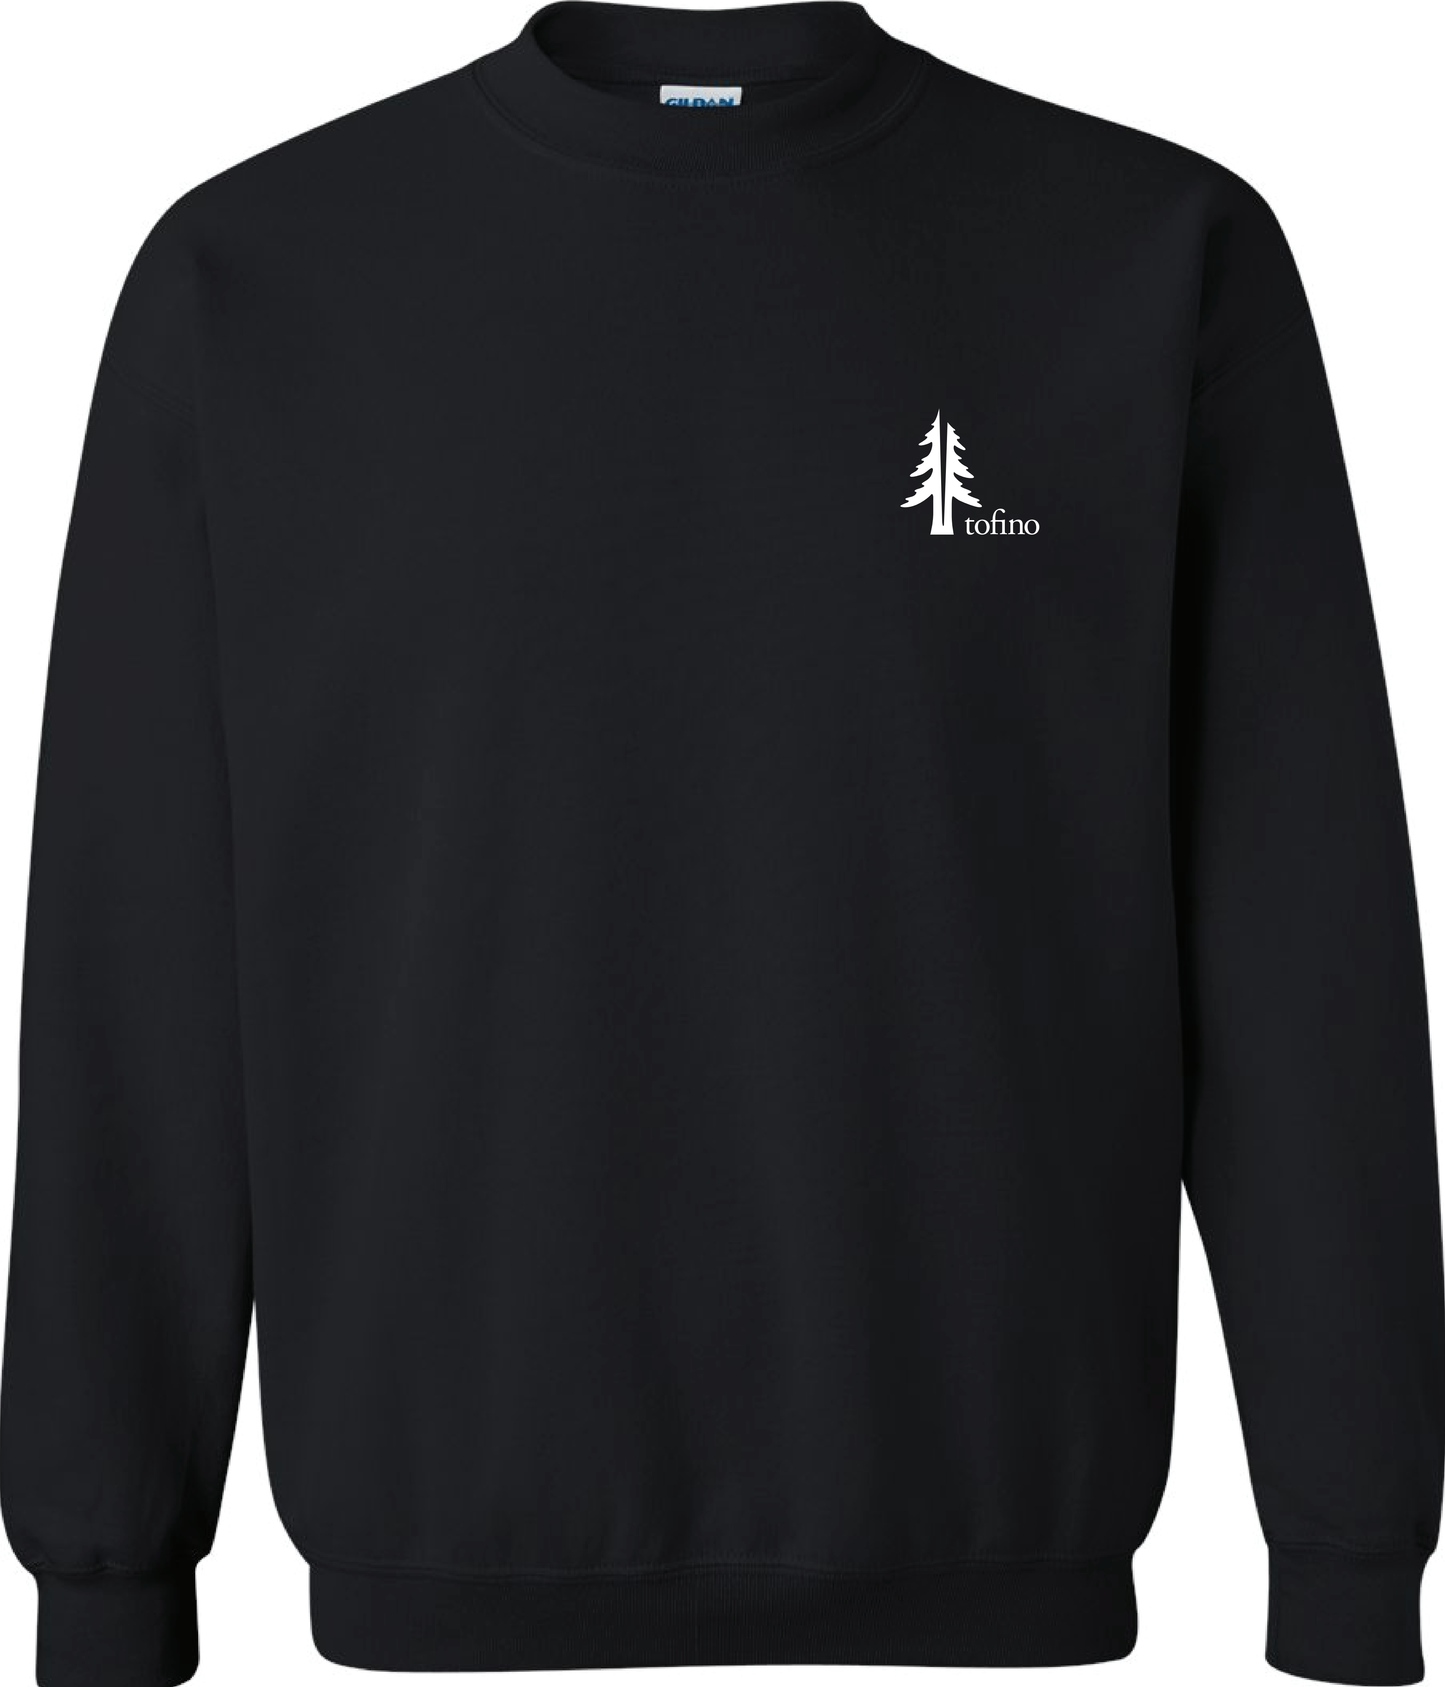 Gildan Two Trees Tofino Logo - Crewneck Sweater